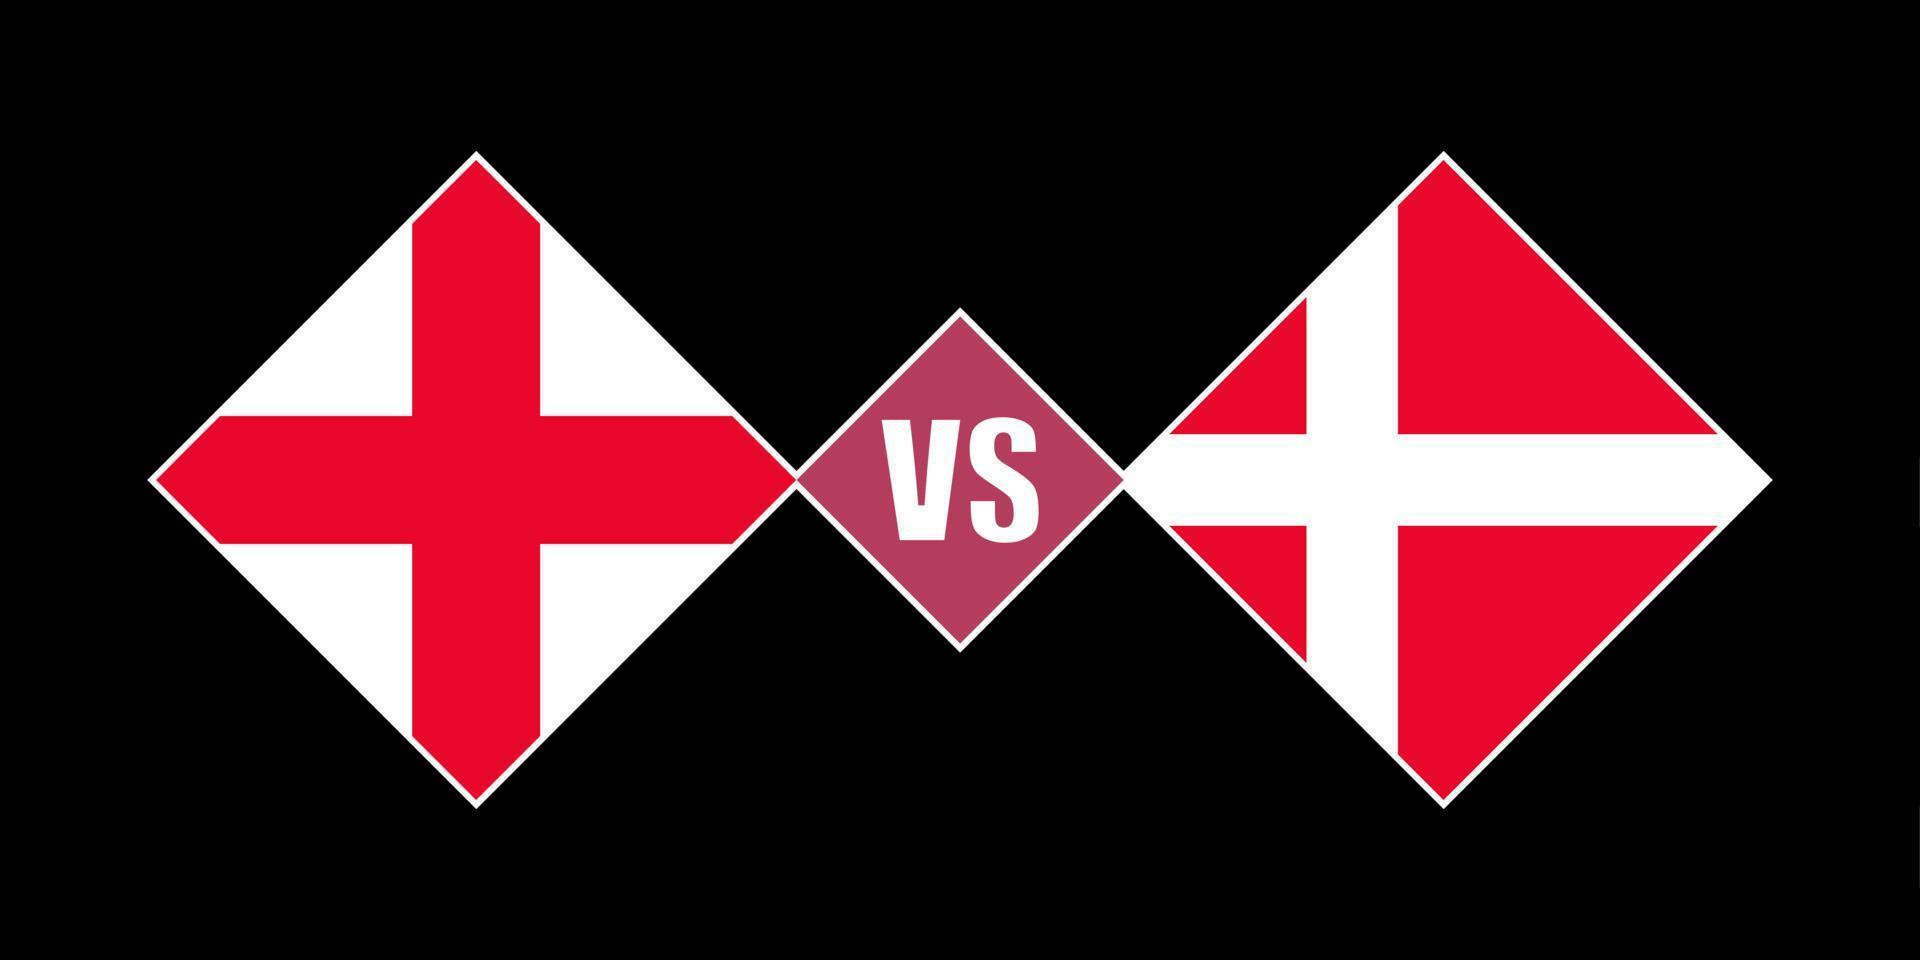 England vs Denmark flag concept. Vector illustration.